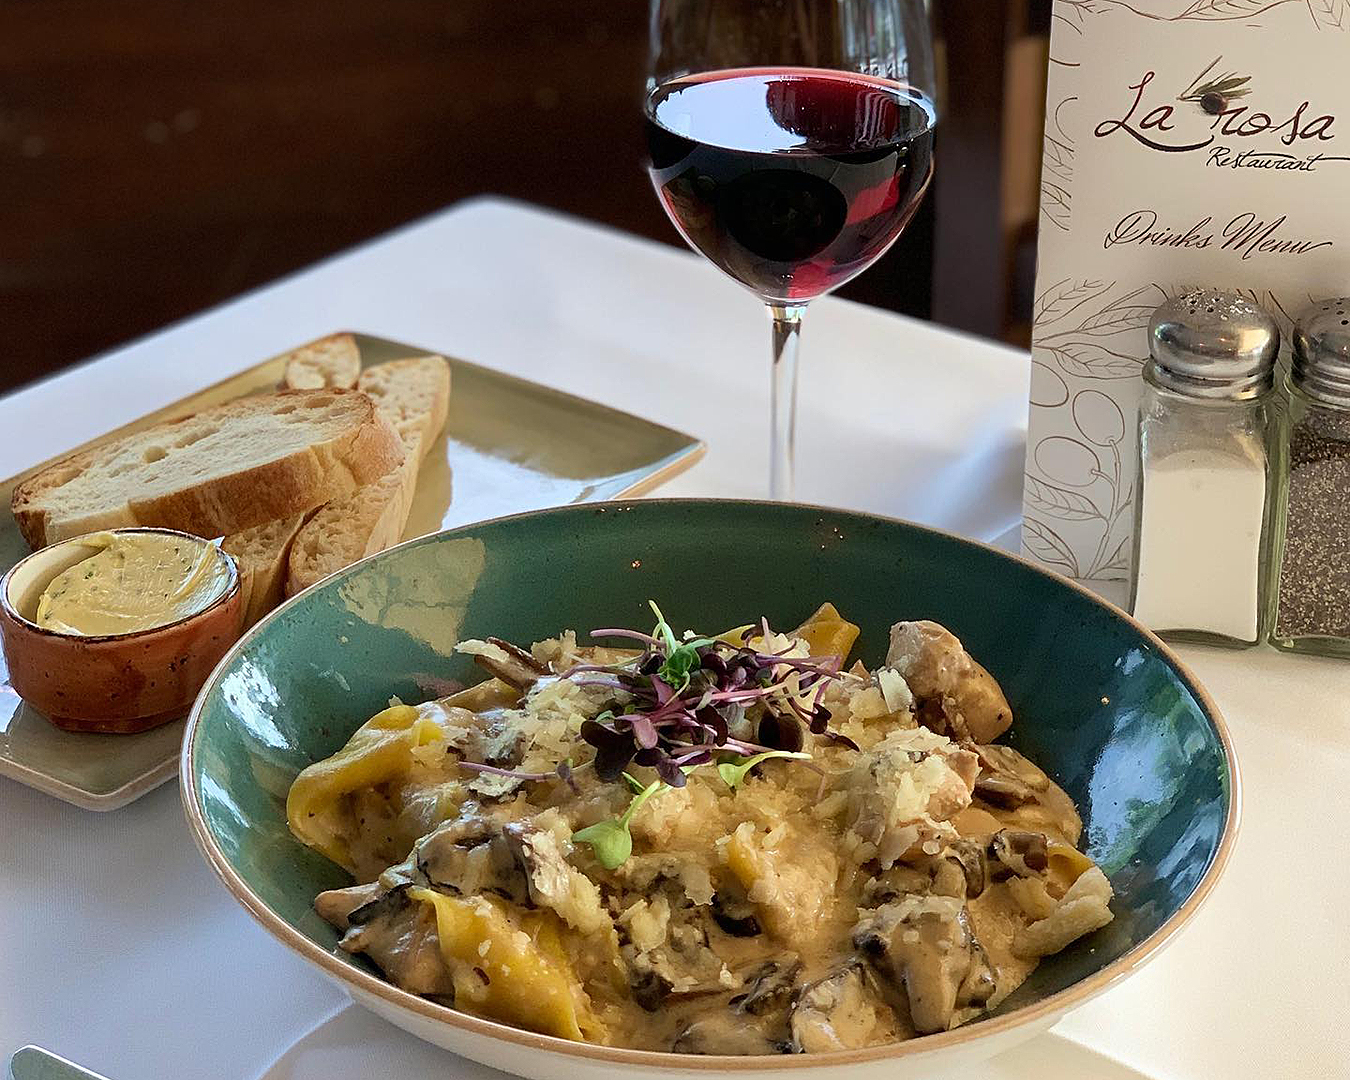 Wine & Pasta at La Rosa